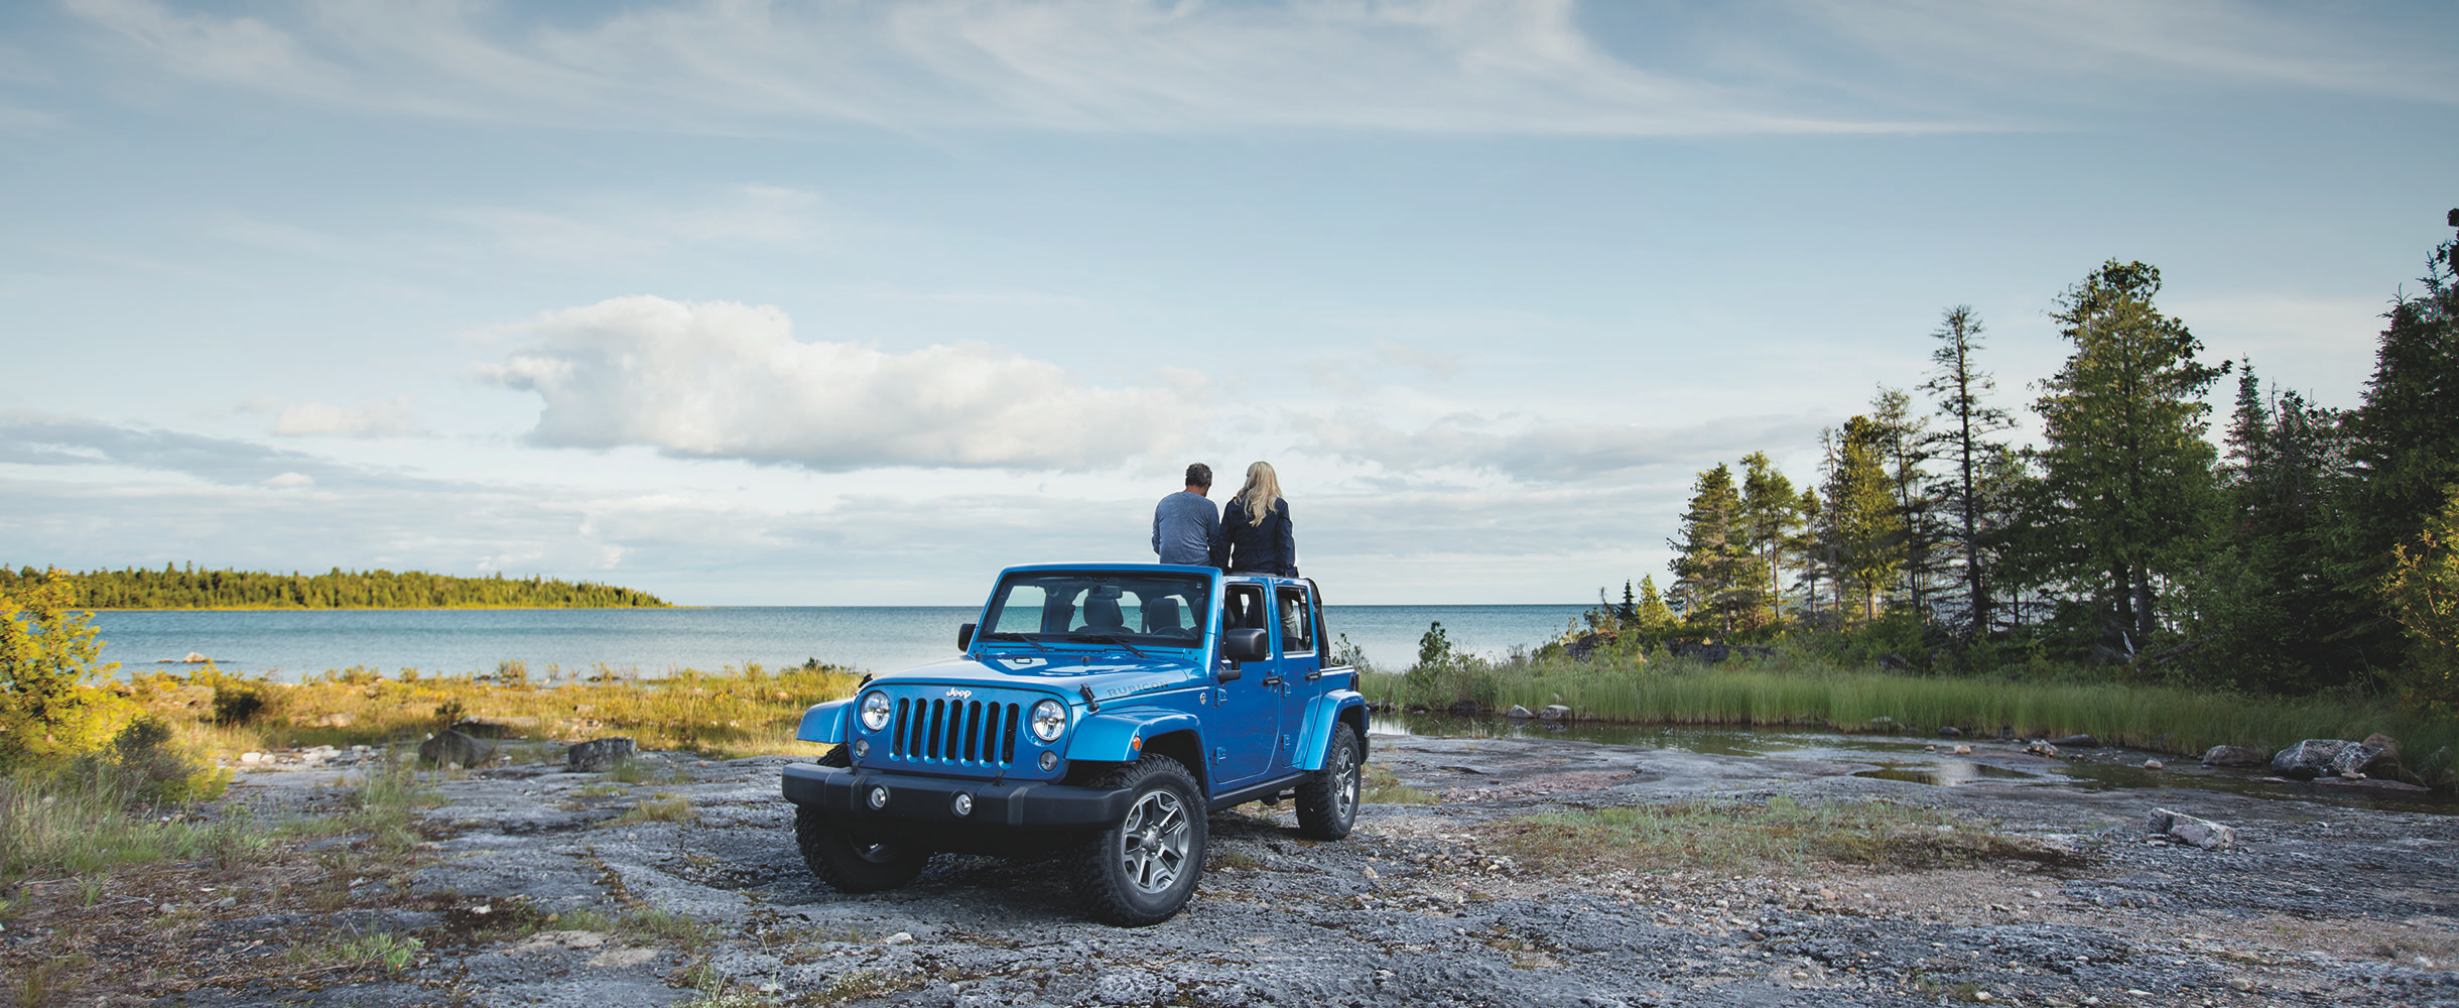 Jeep Rental Hawaii Island: Jeep Wrangler 4x4 | Budget Car Rental